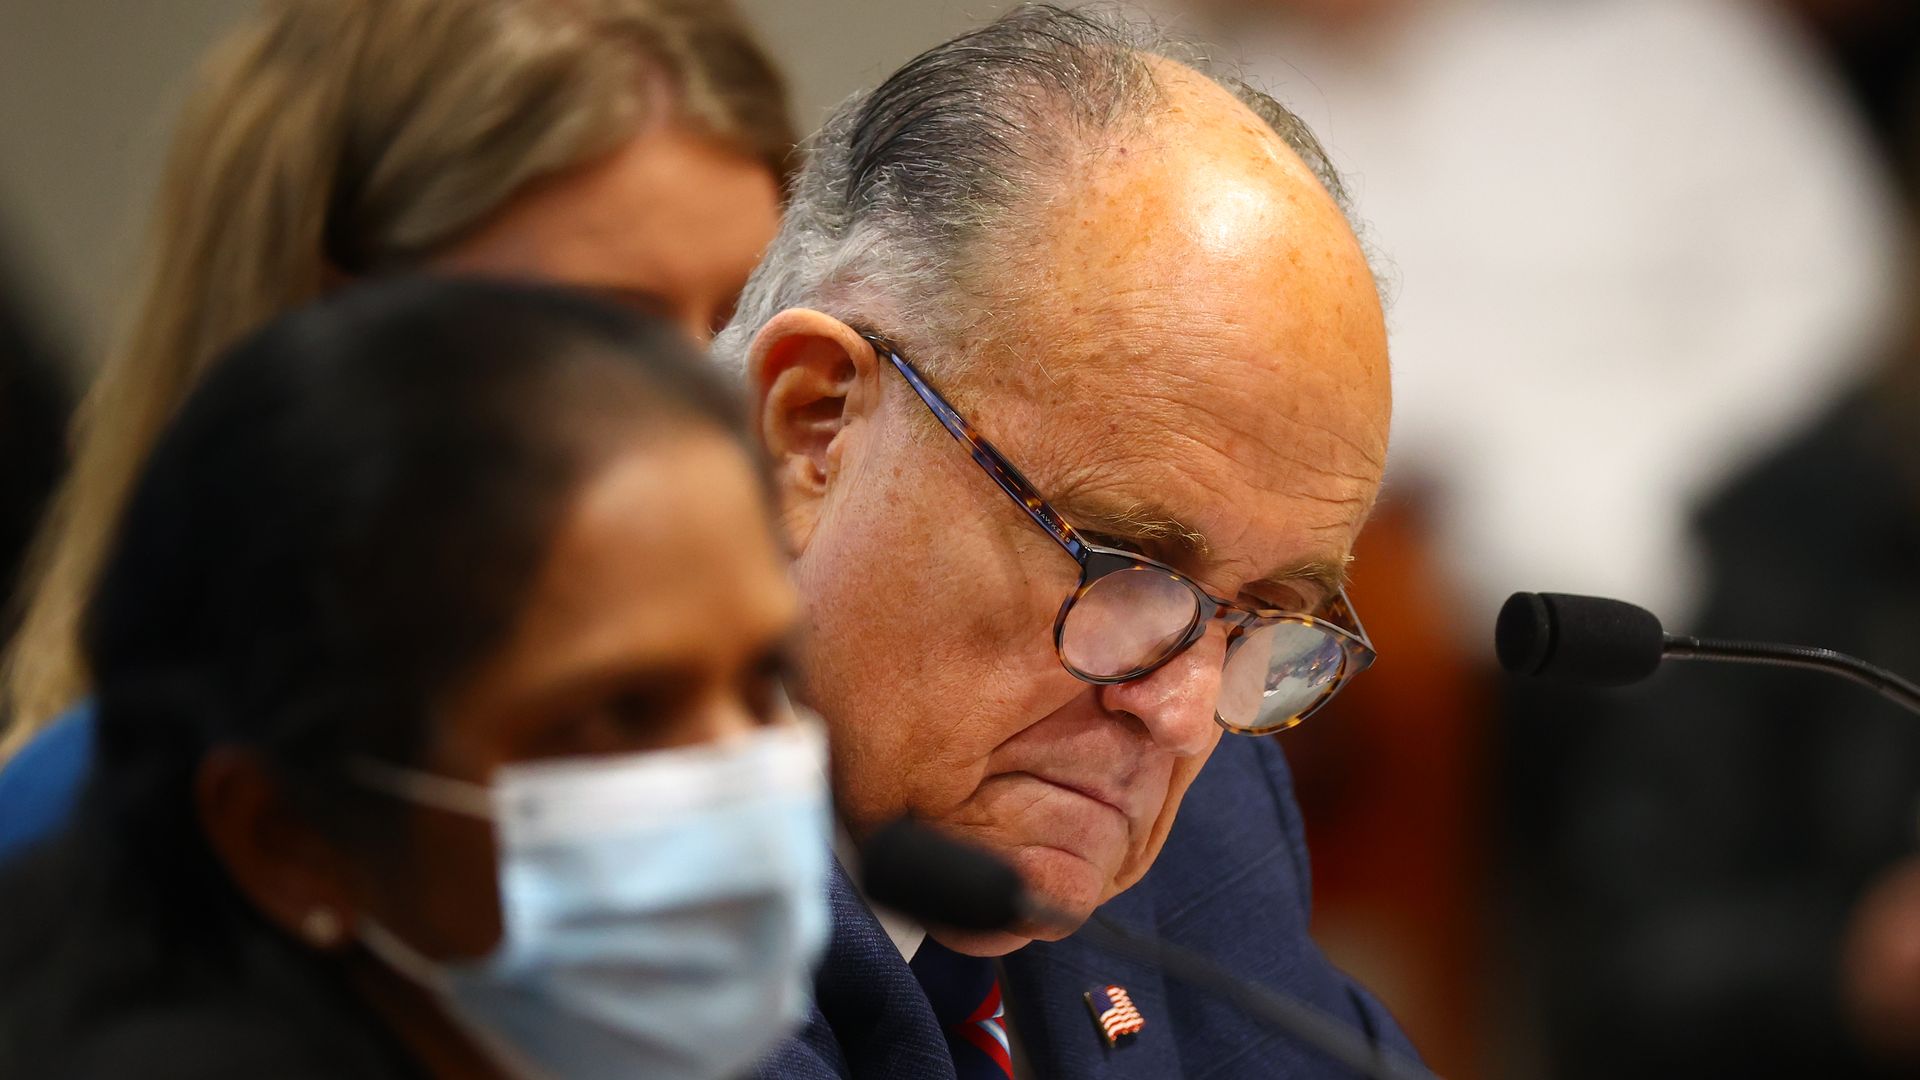 Rudy Giuliani sits next to a woman wearing a mask 